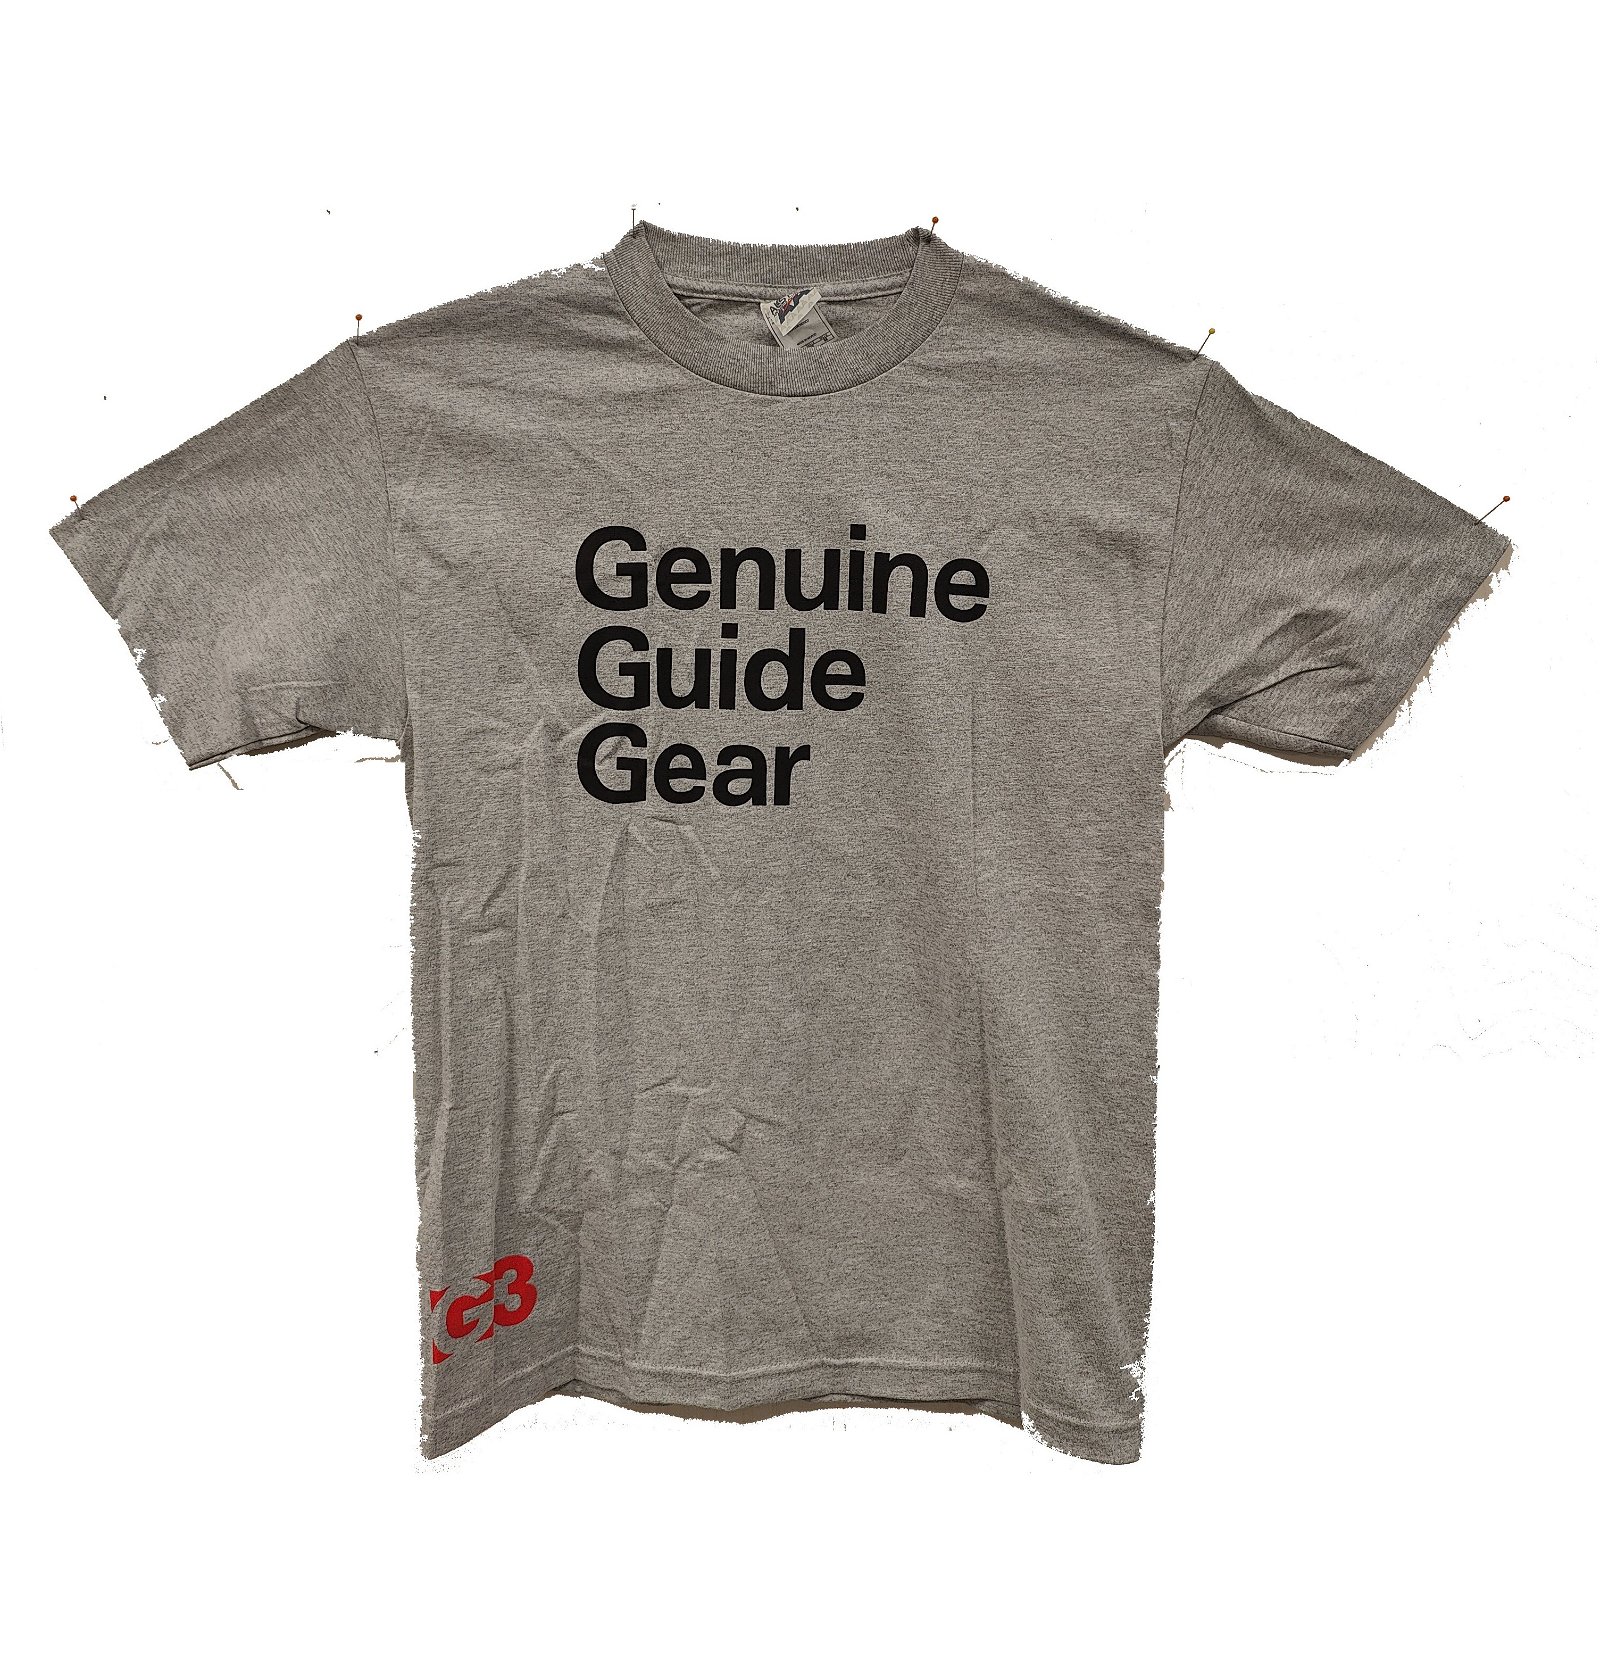 G3 Statement T-Shirt | Promo materiell